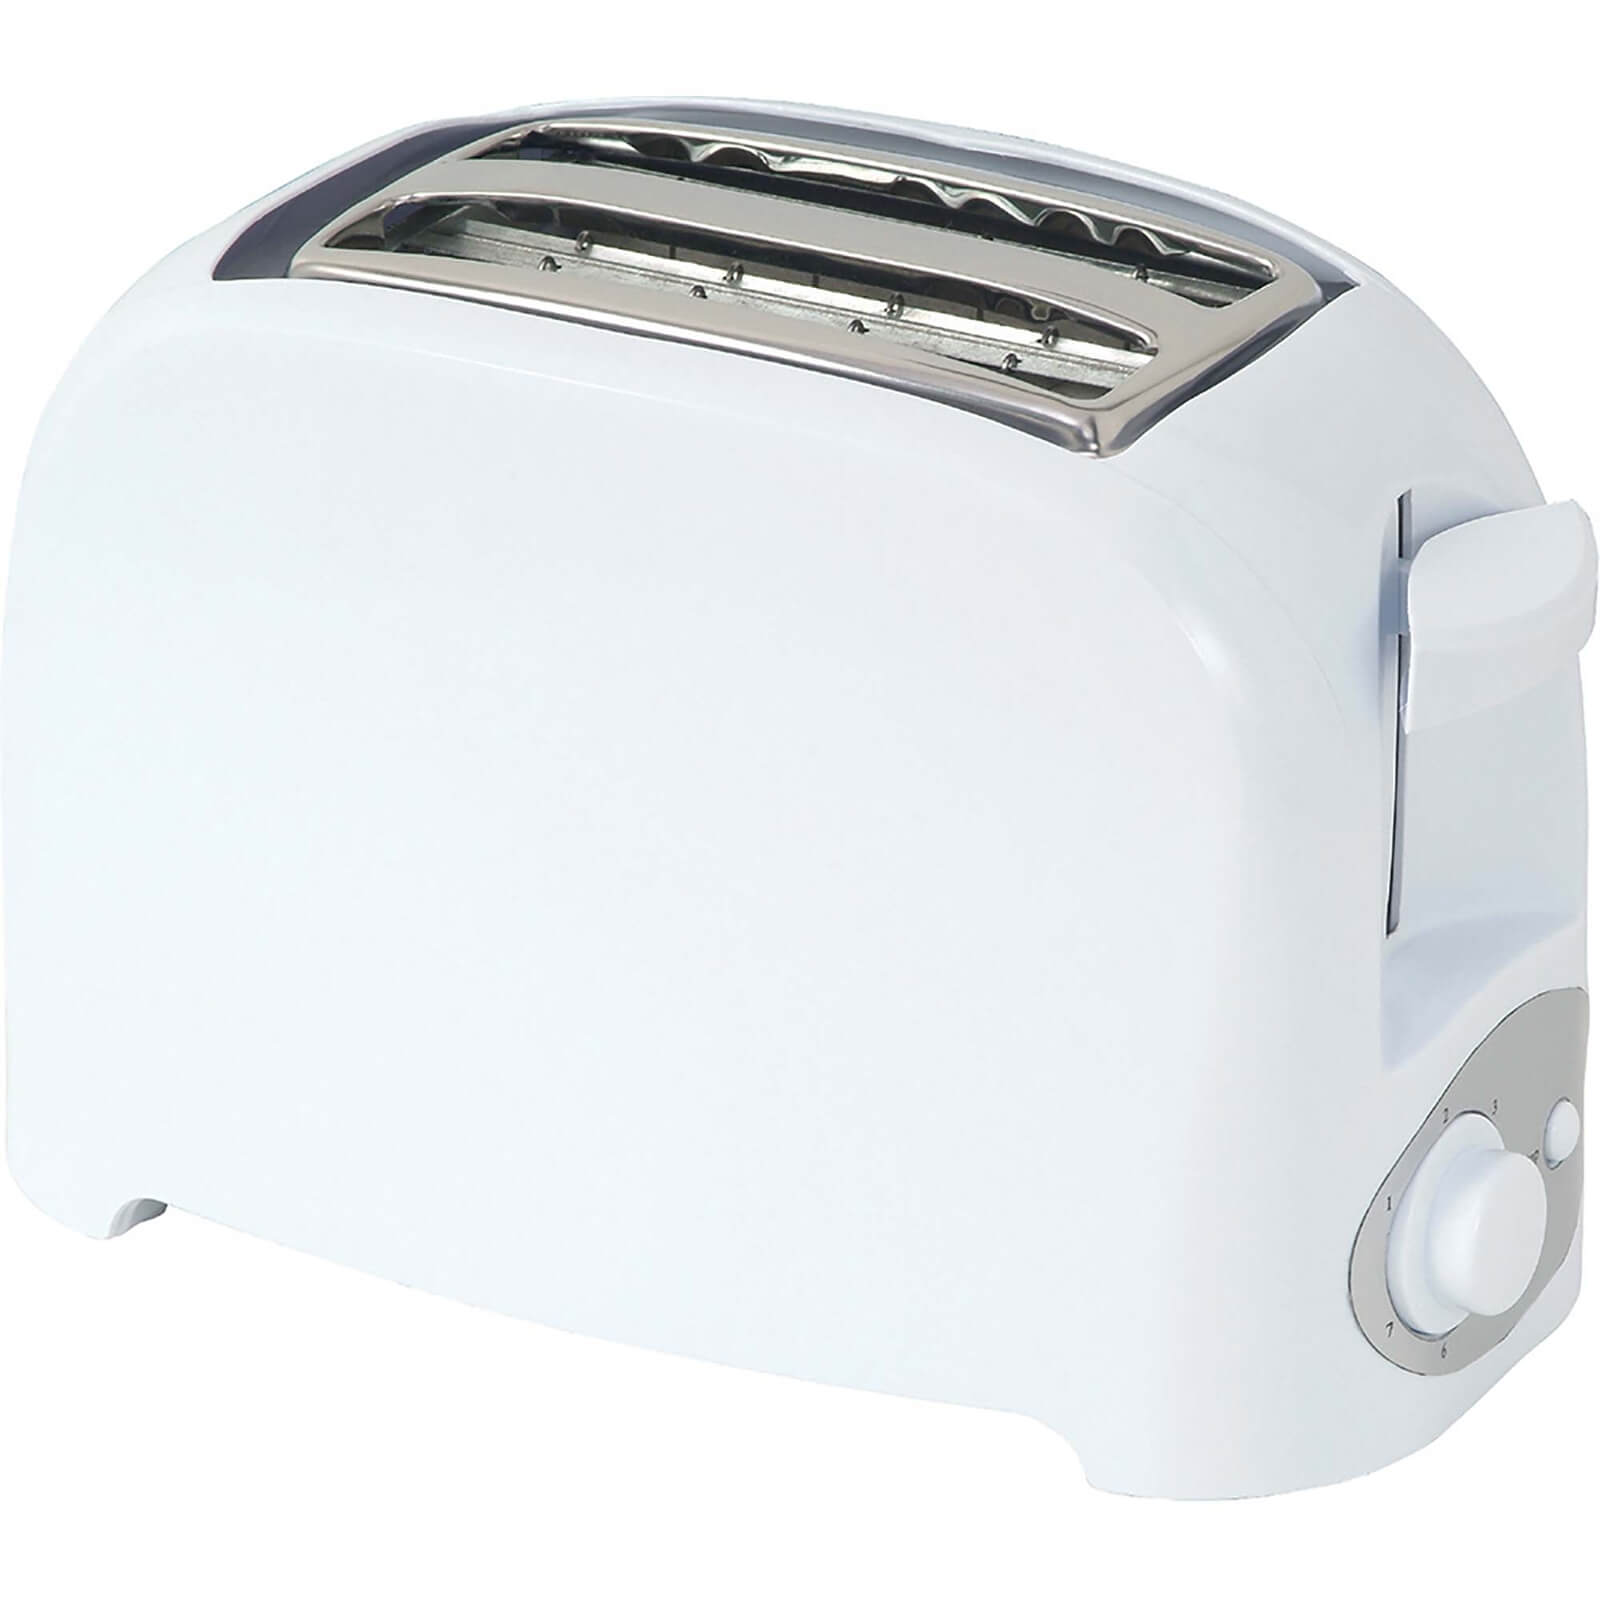 Infapower 2 Slice Toaster - White